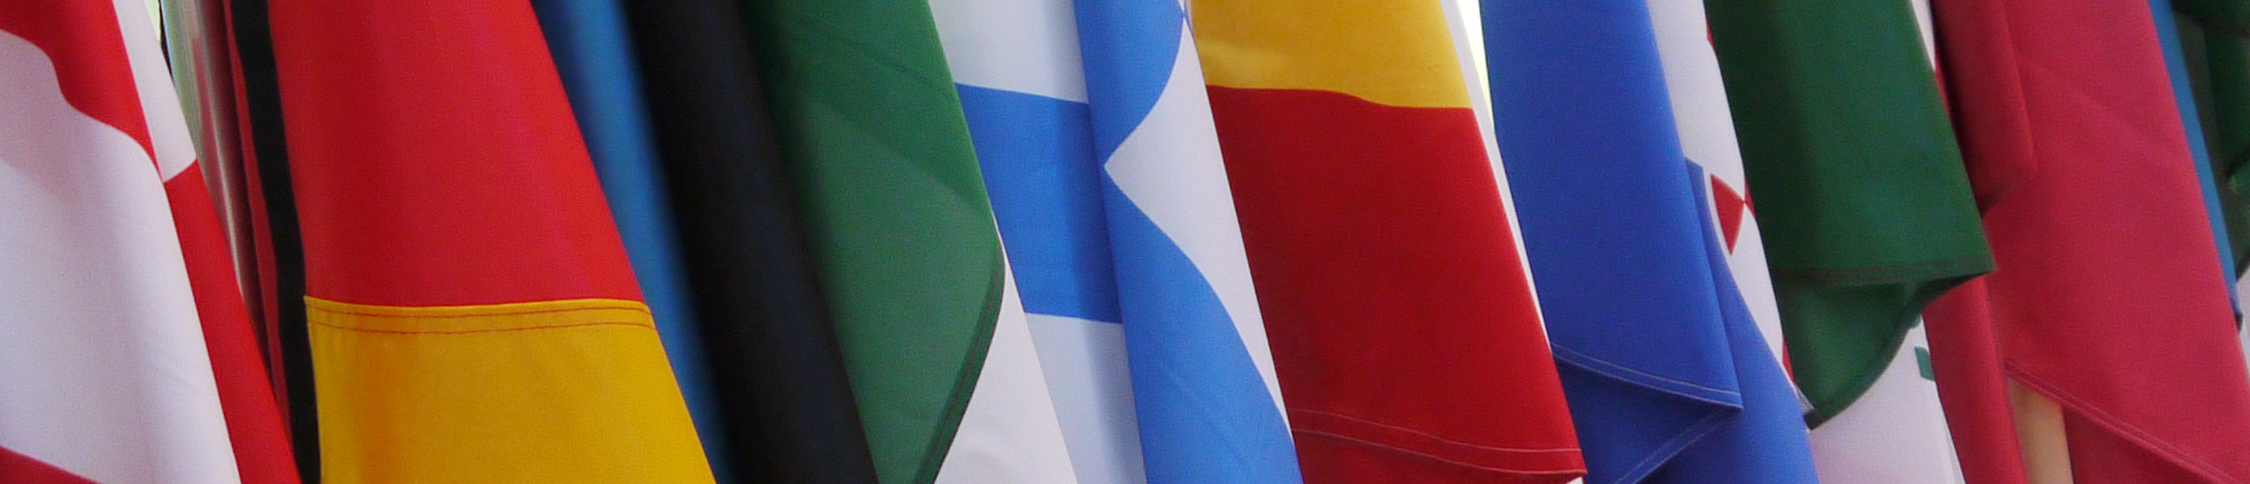 european country flags